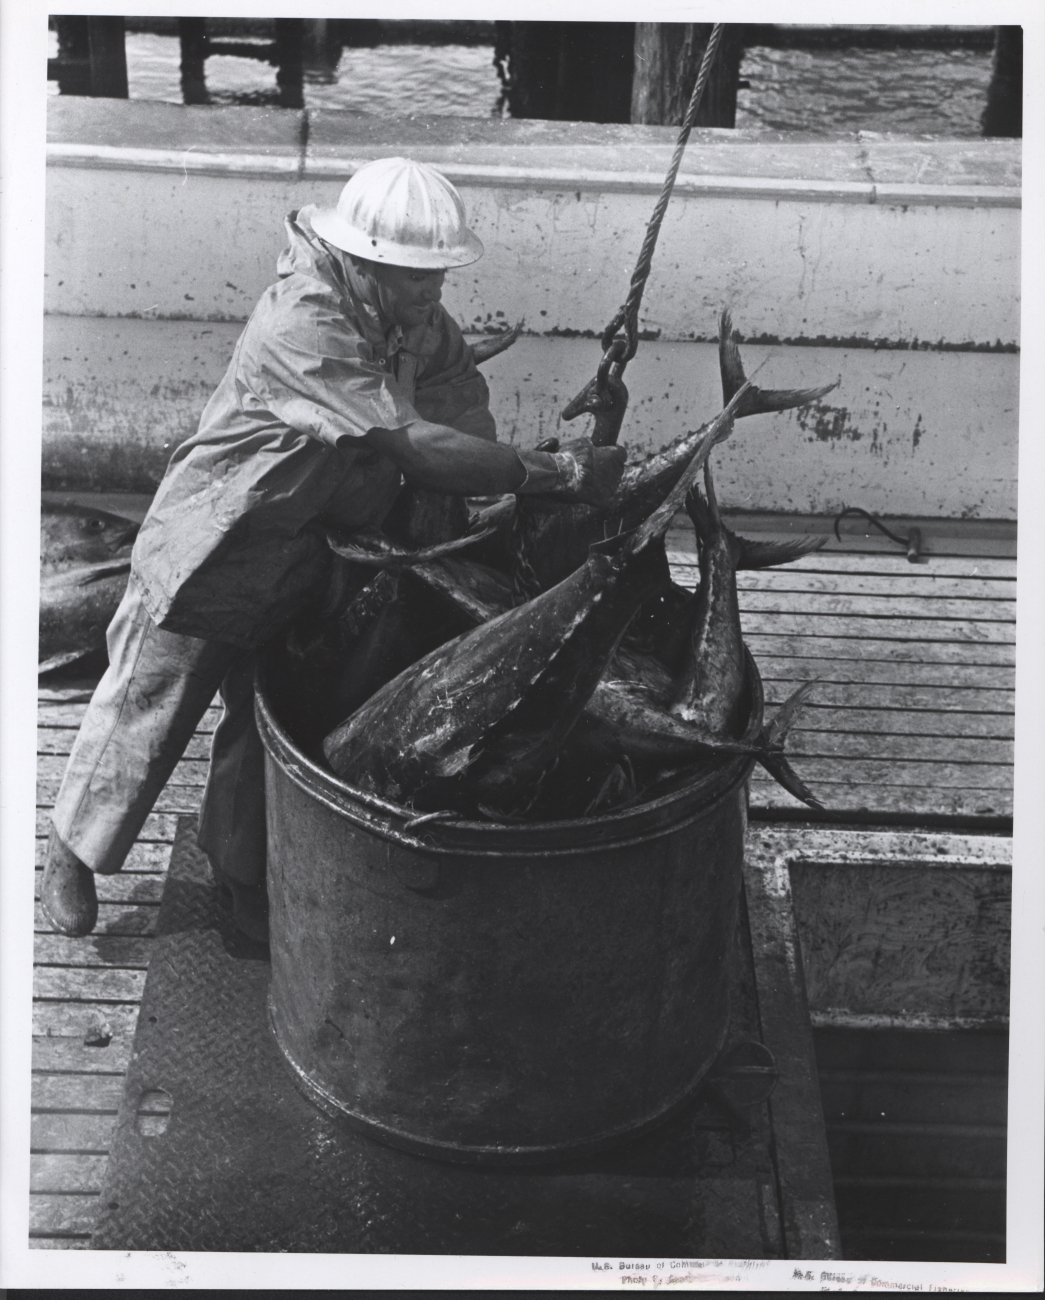 Unloading catch of yellowfin tuna